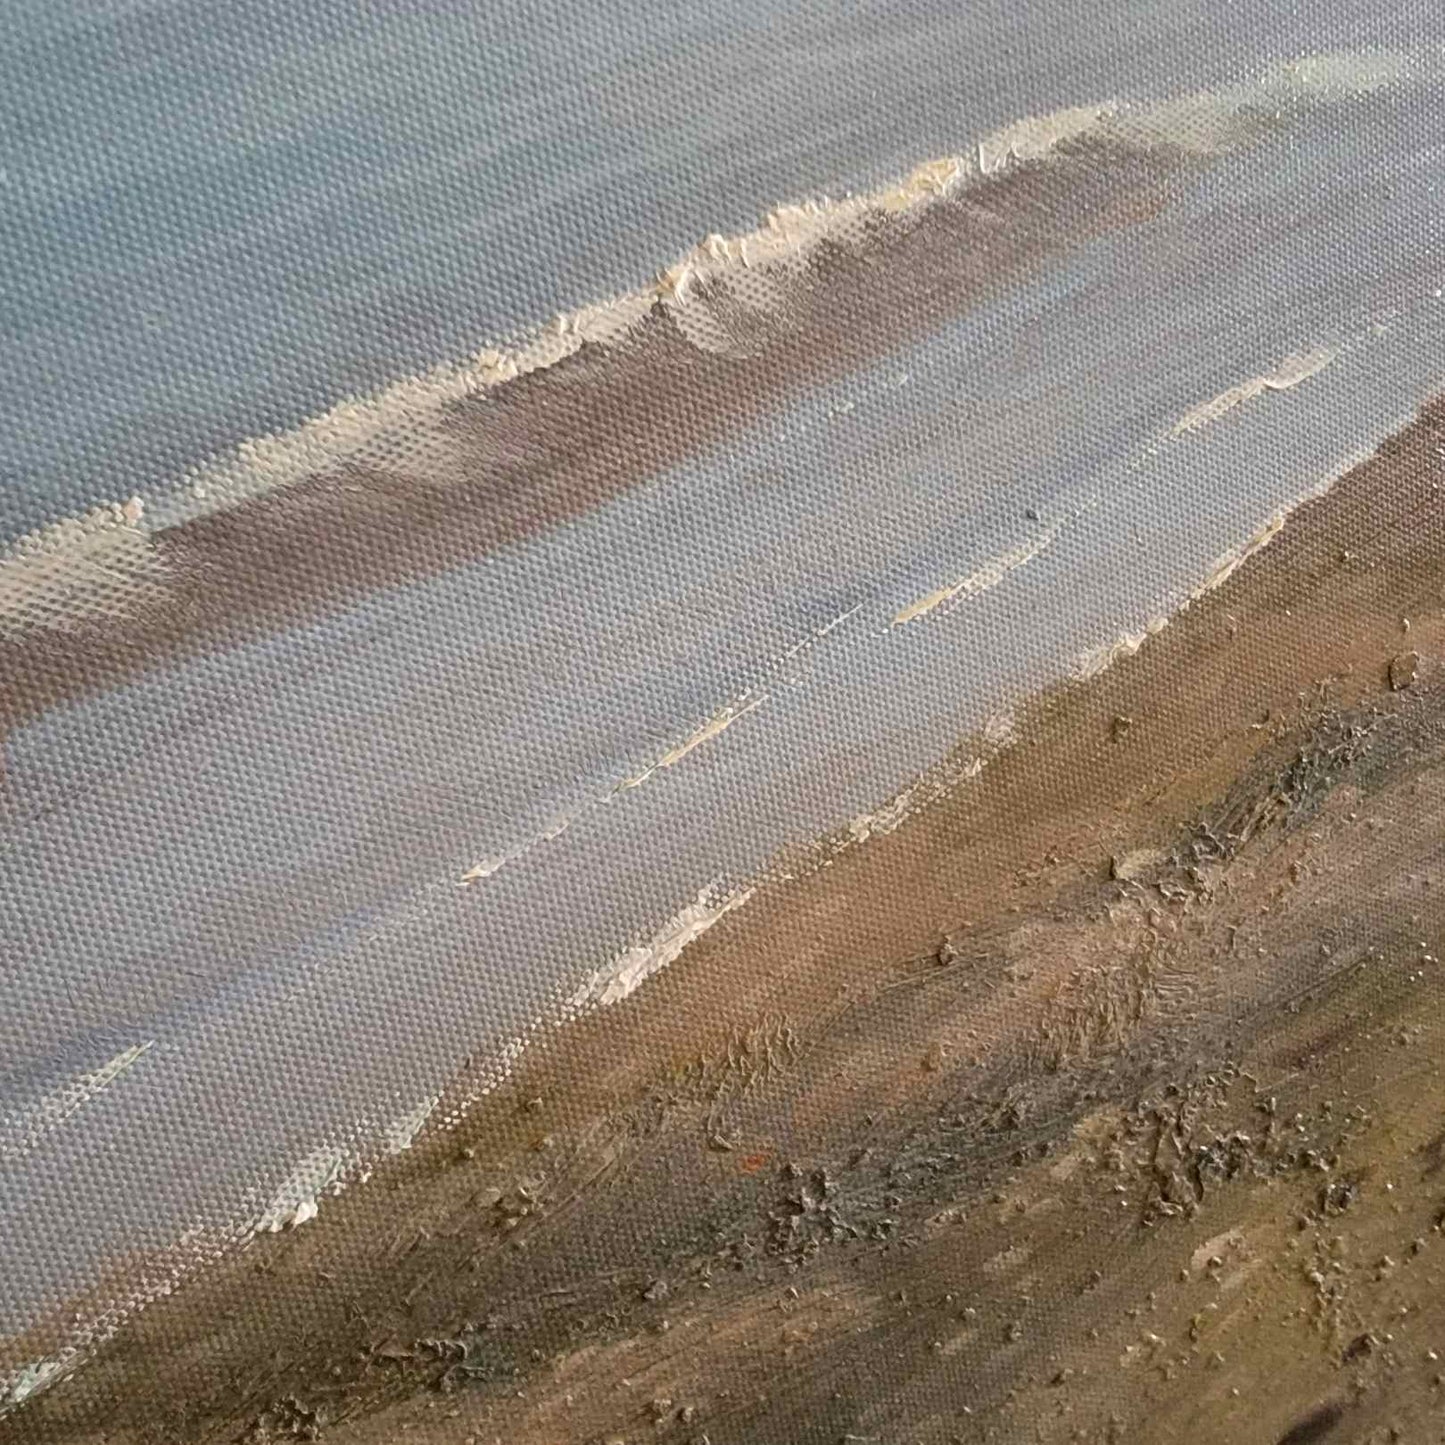 Marine Shore Painting 120x85 cm